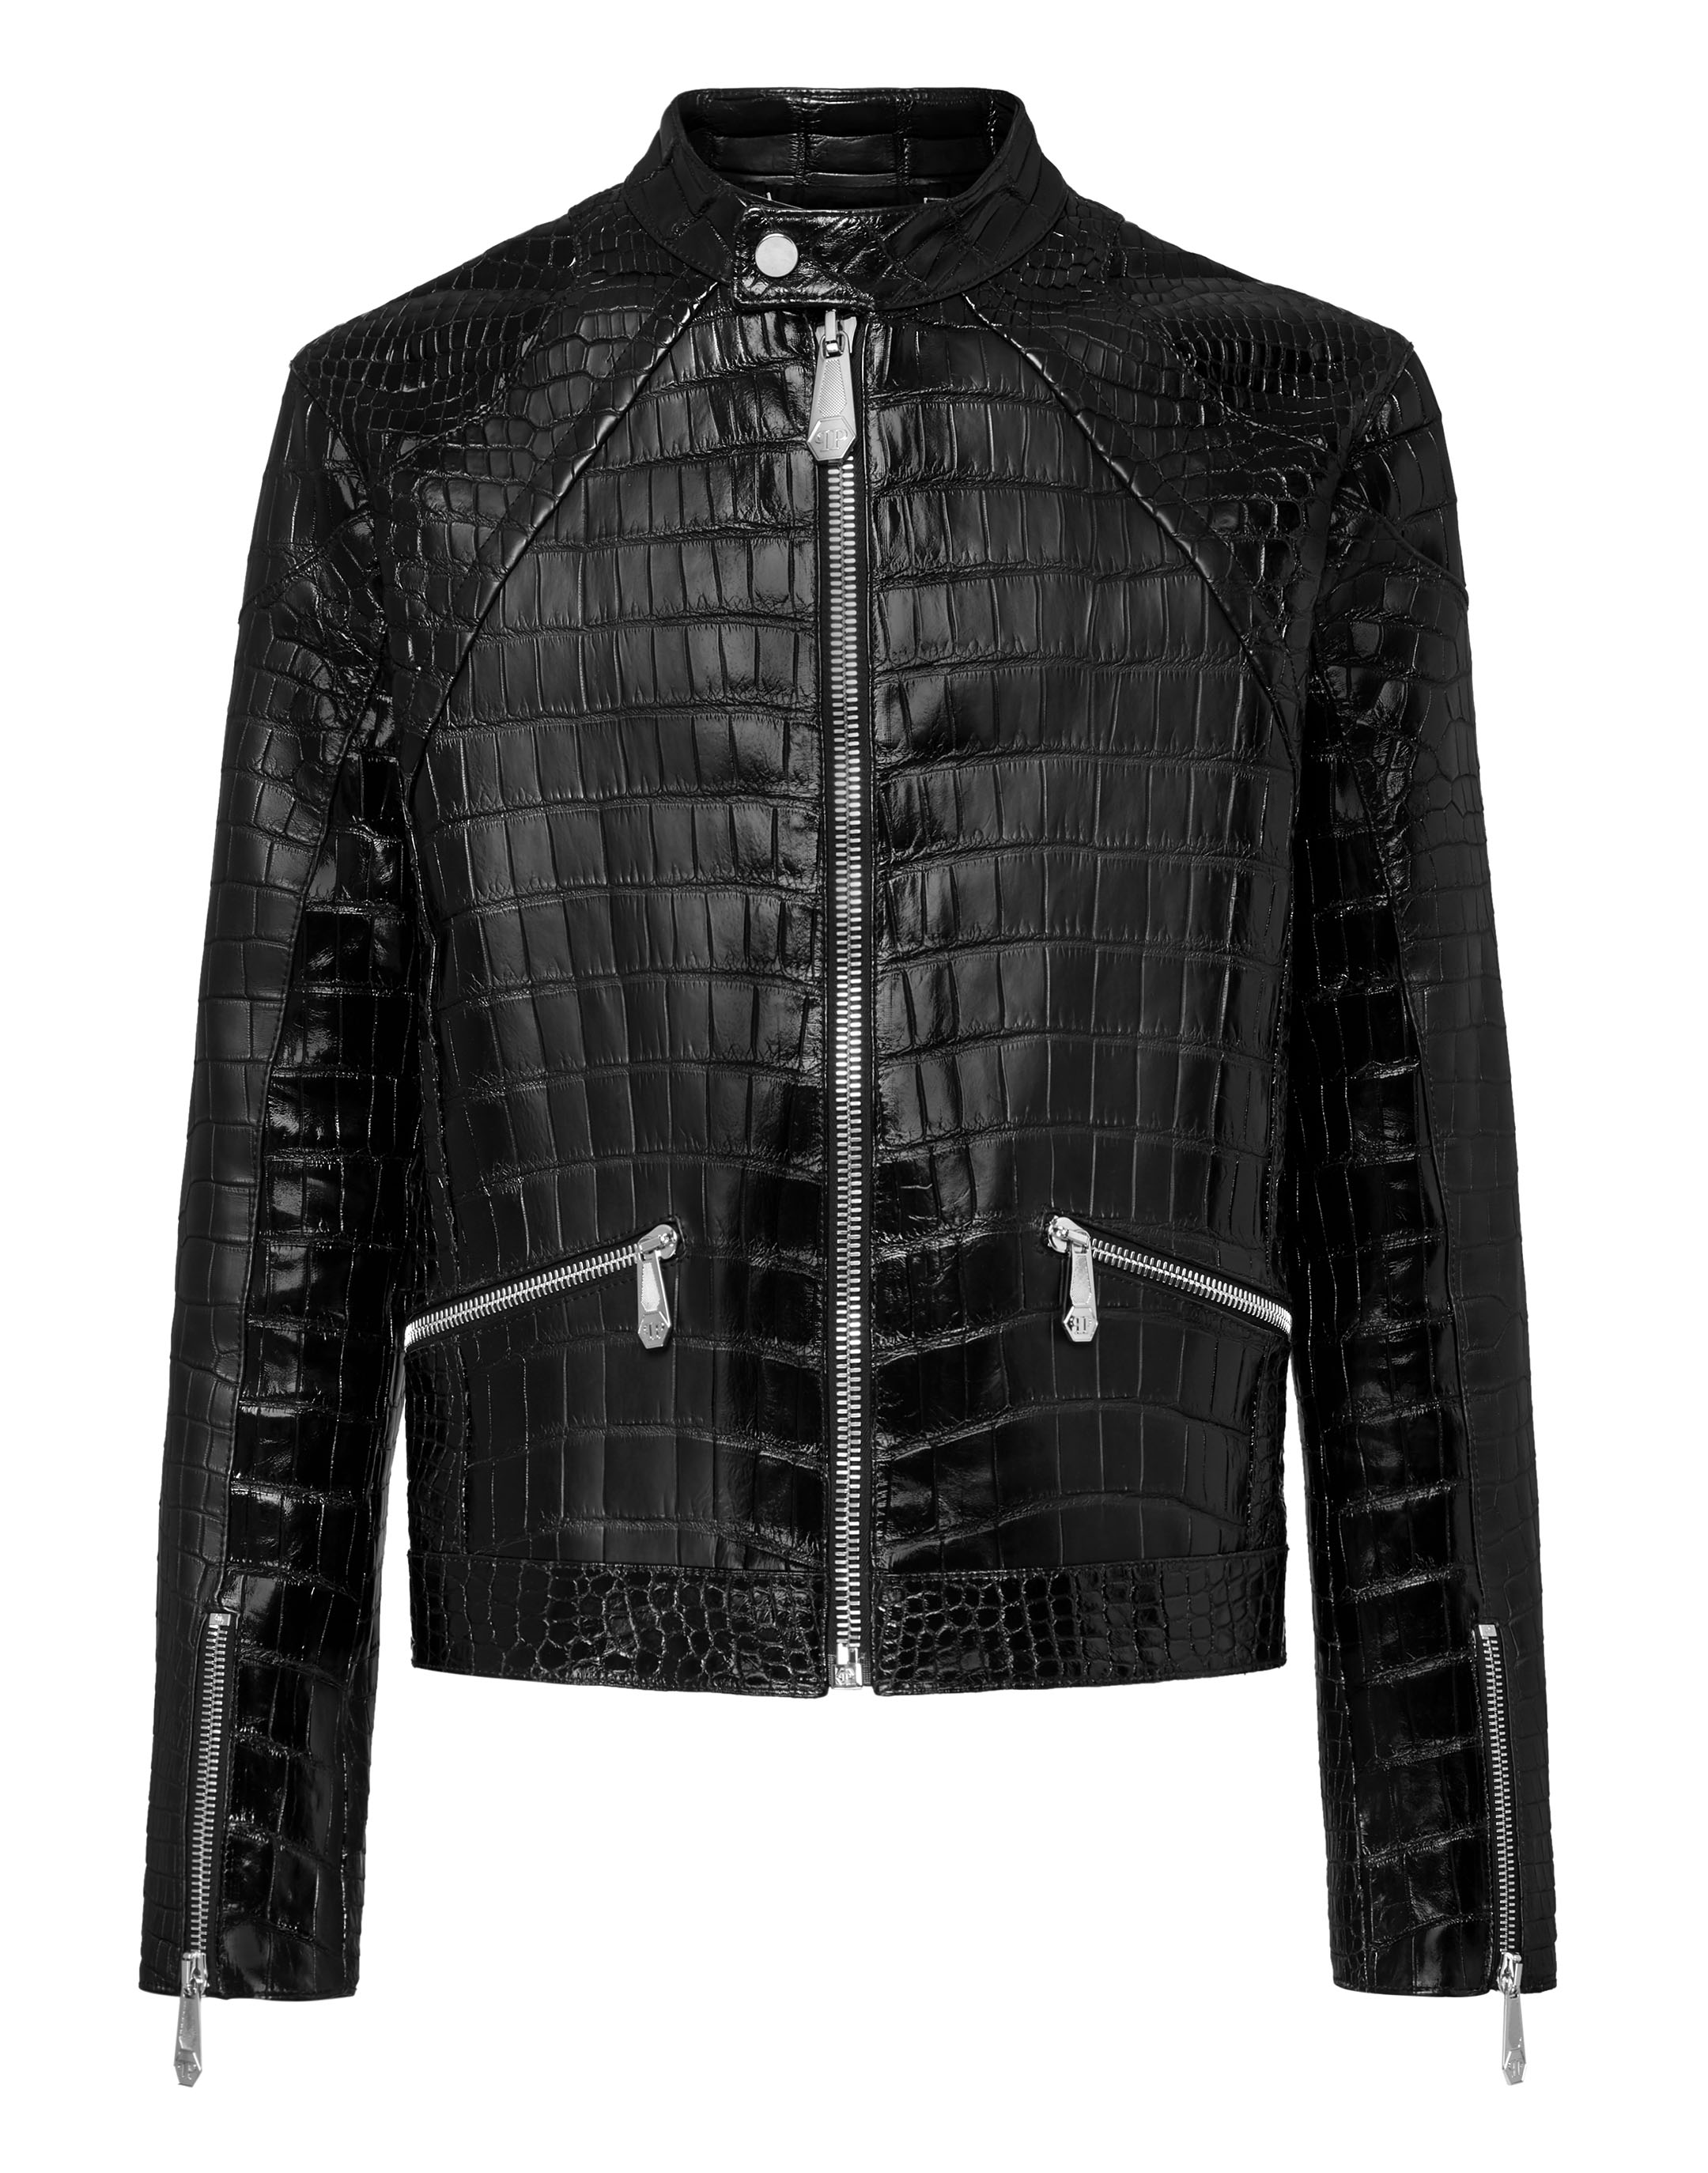 Leather Crocodile Jacket Luxury 